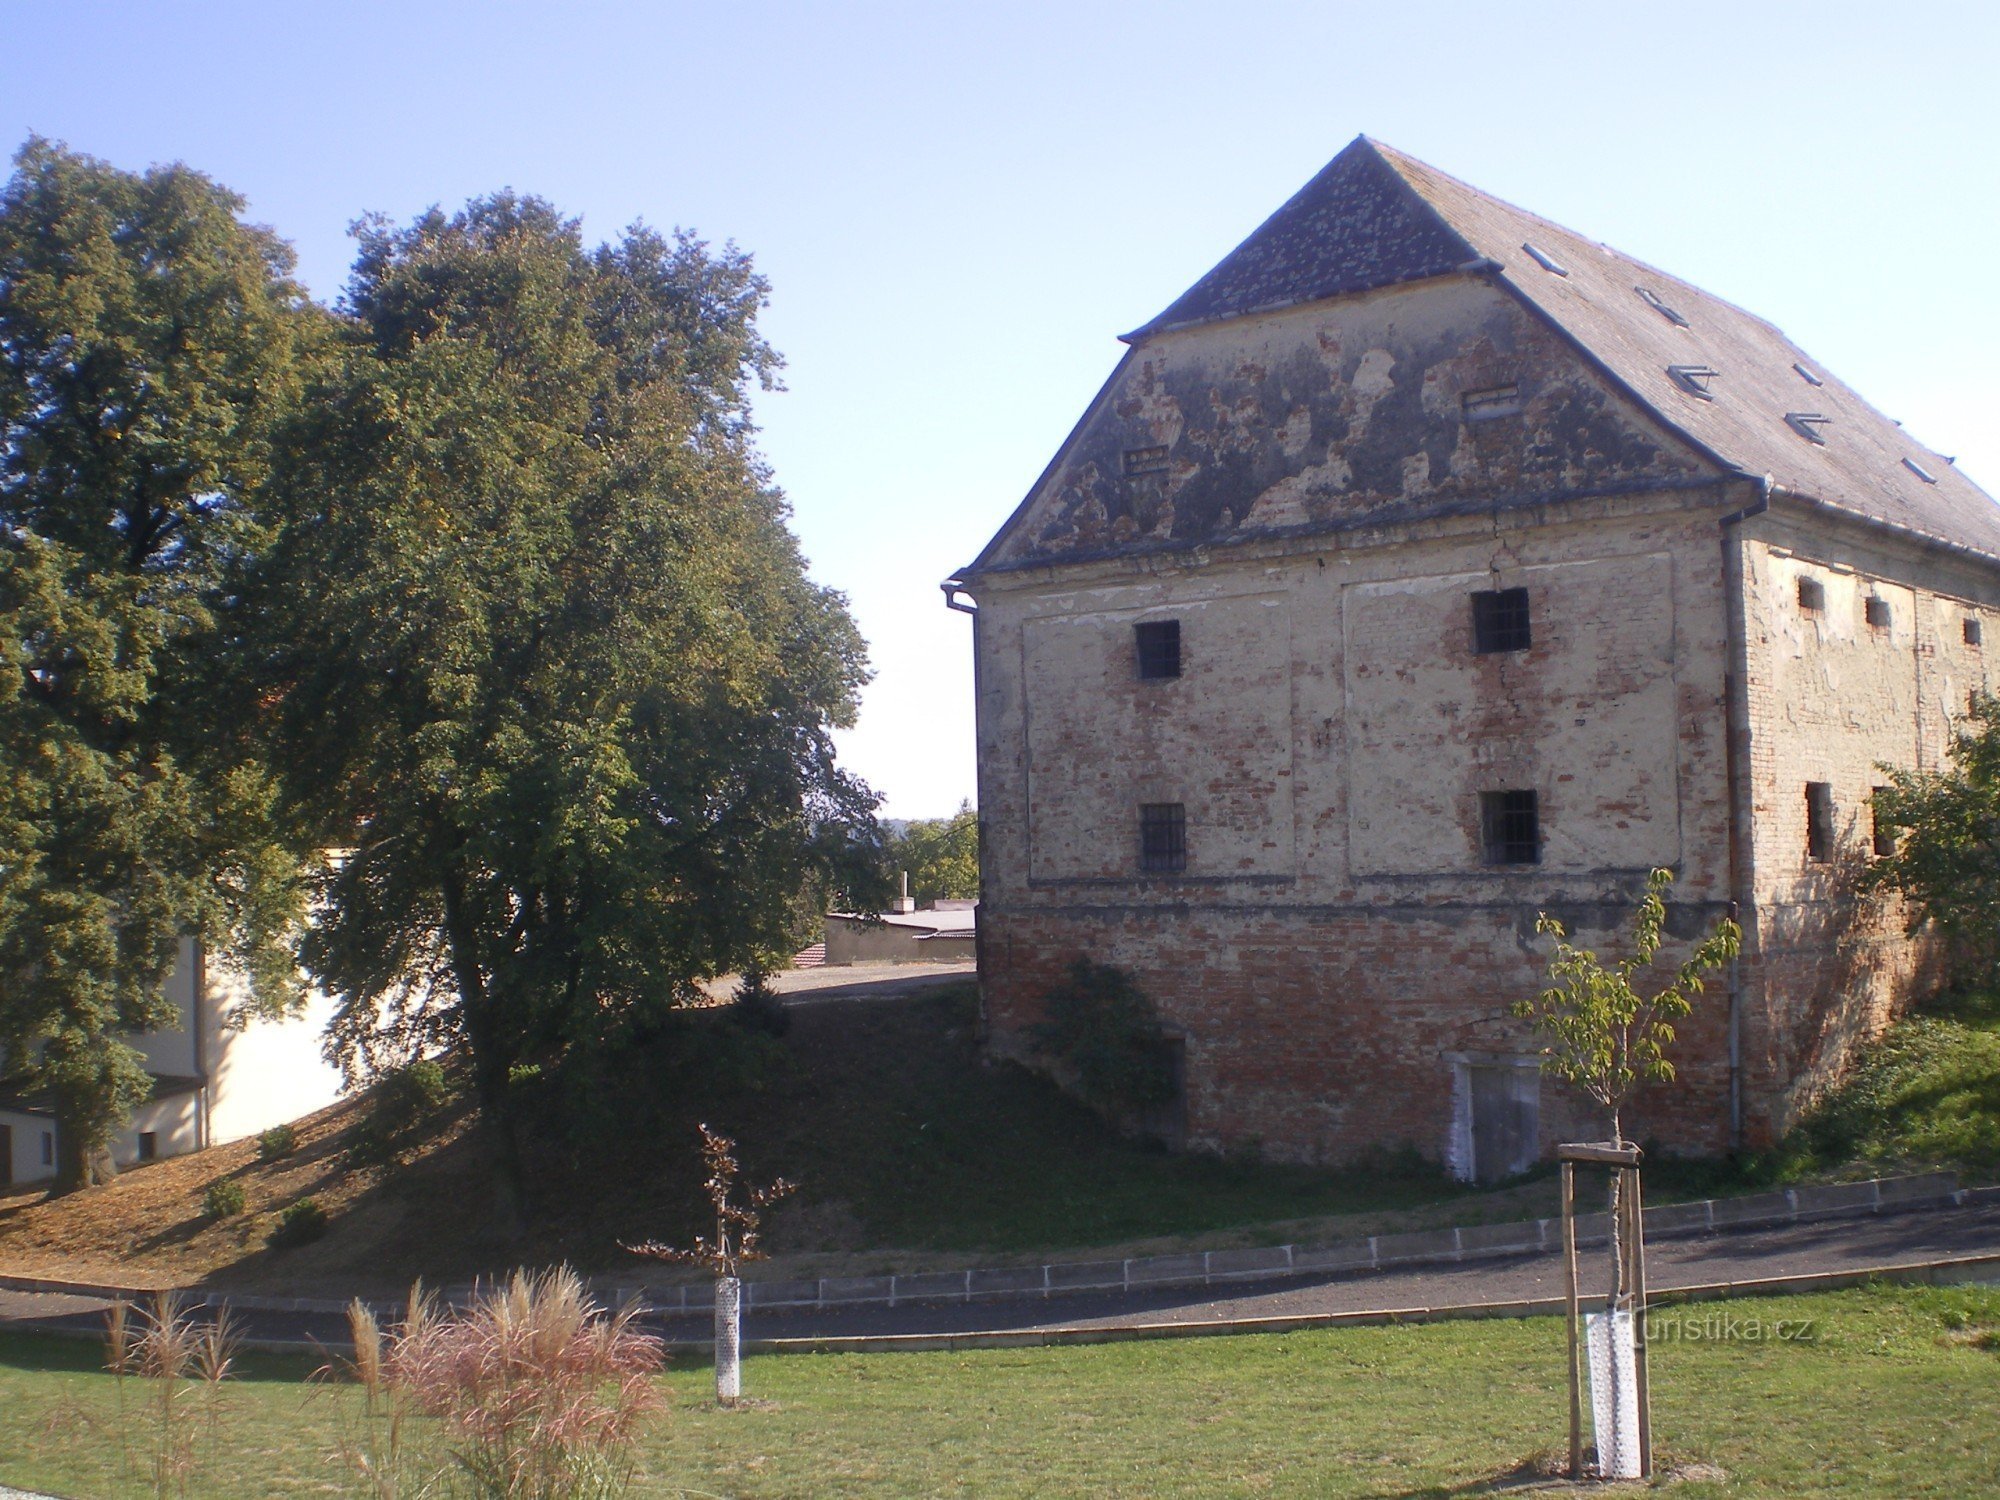 Fortress near the church in Milonice